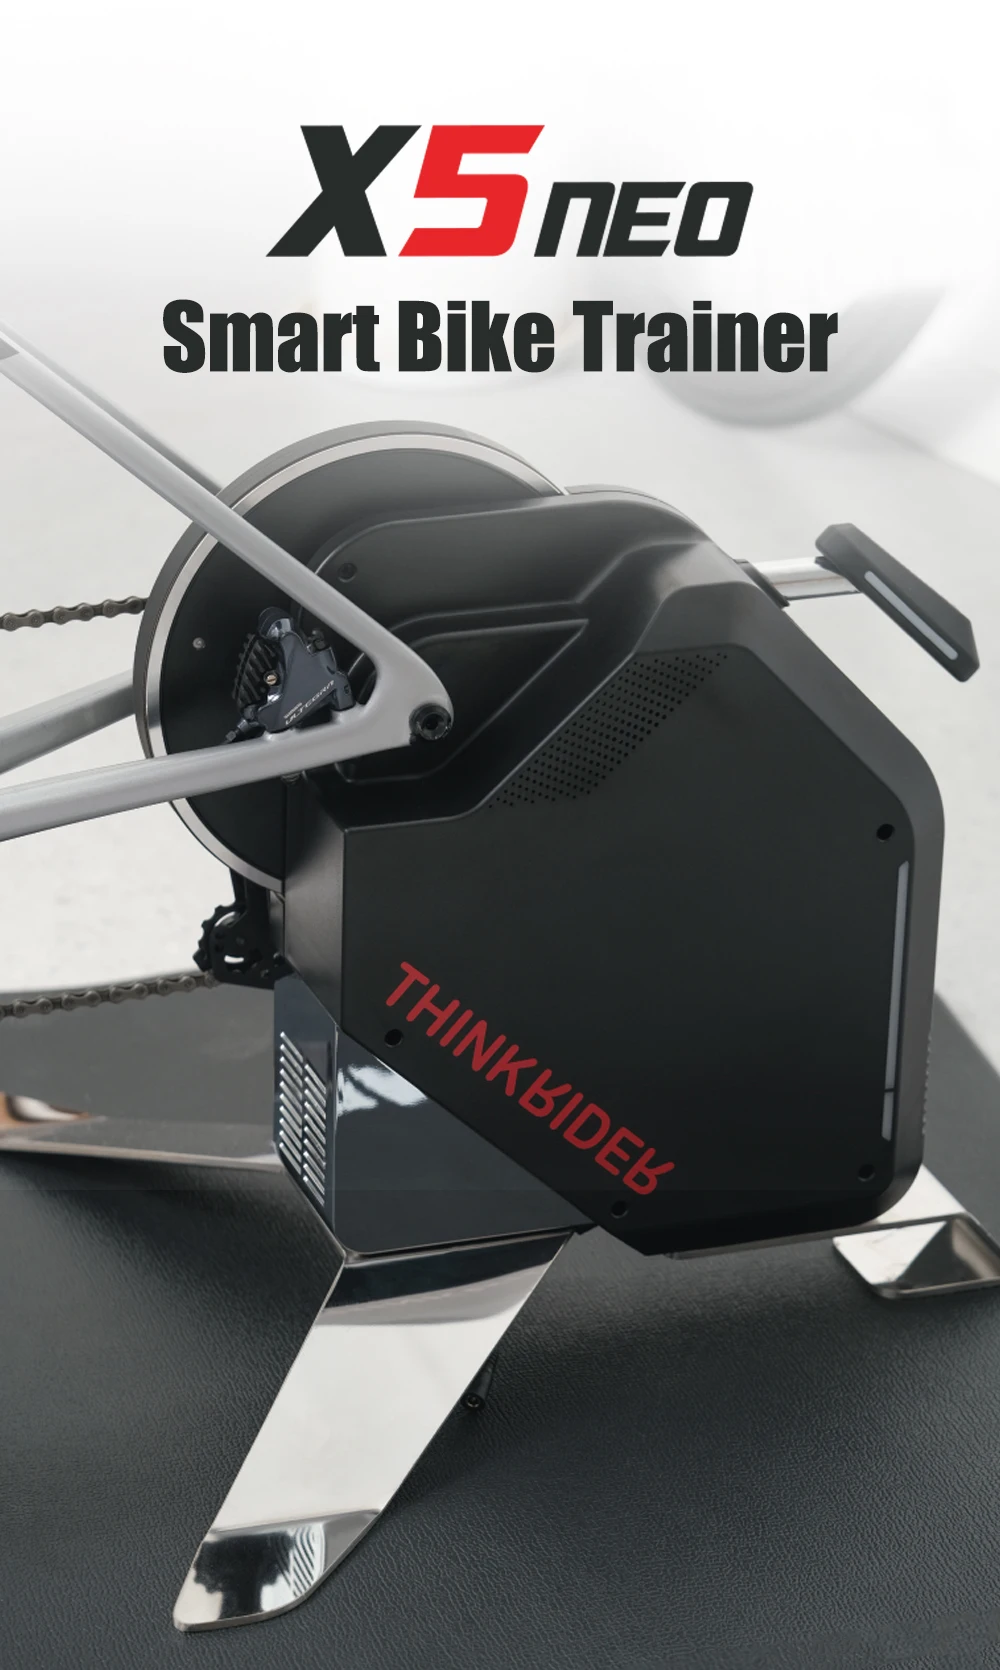 repetir resistirse Todavía Campaña - Rodillo inteligente Thinkrider Bicicleta para Entrenar X5 Neo,  compatible con Zwift, Garmin, Bryton | MTBeros - Tu foro de ciclismo MTB